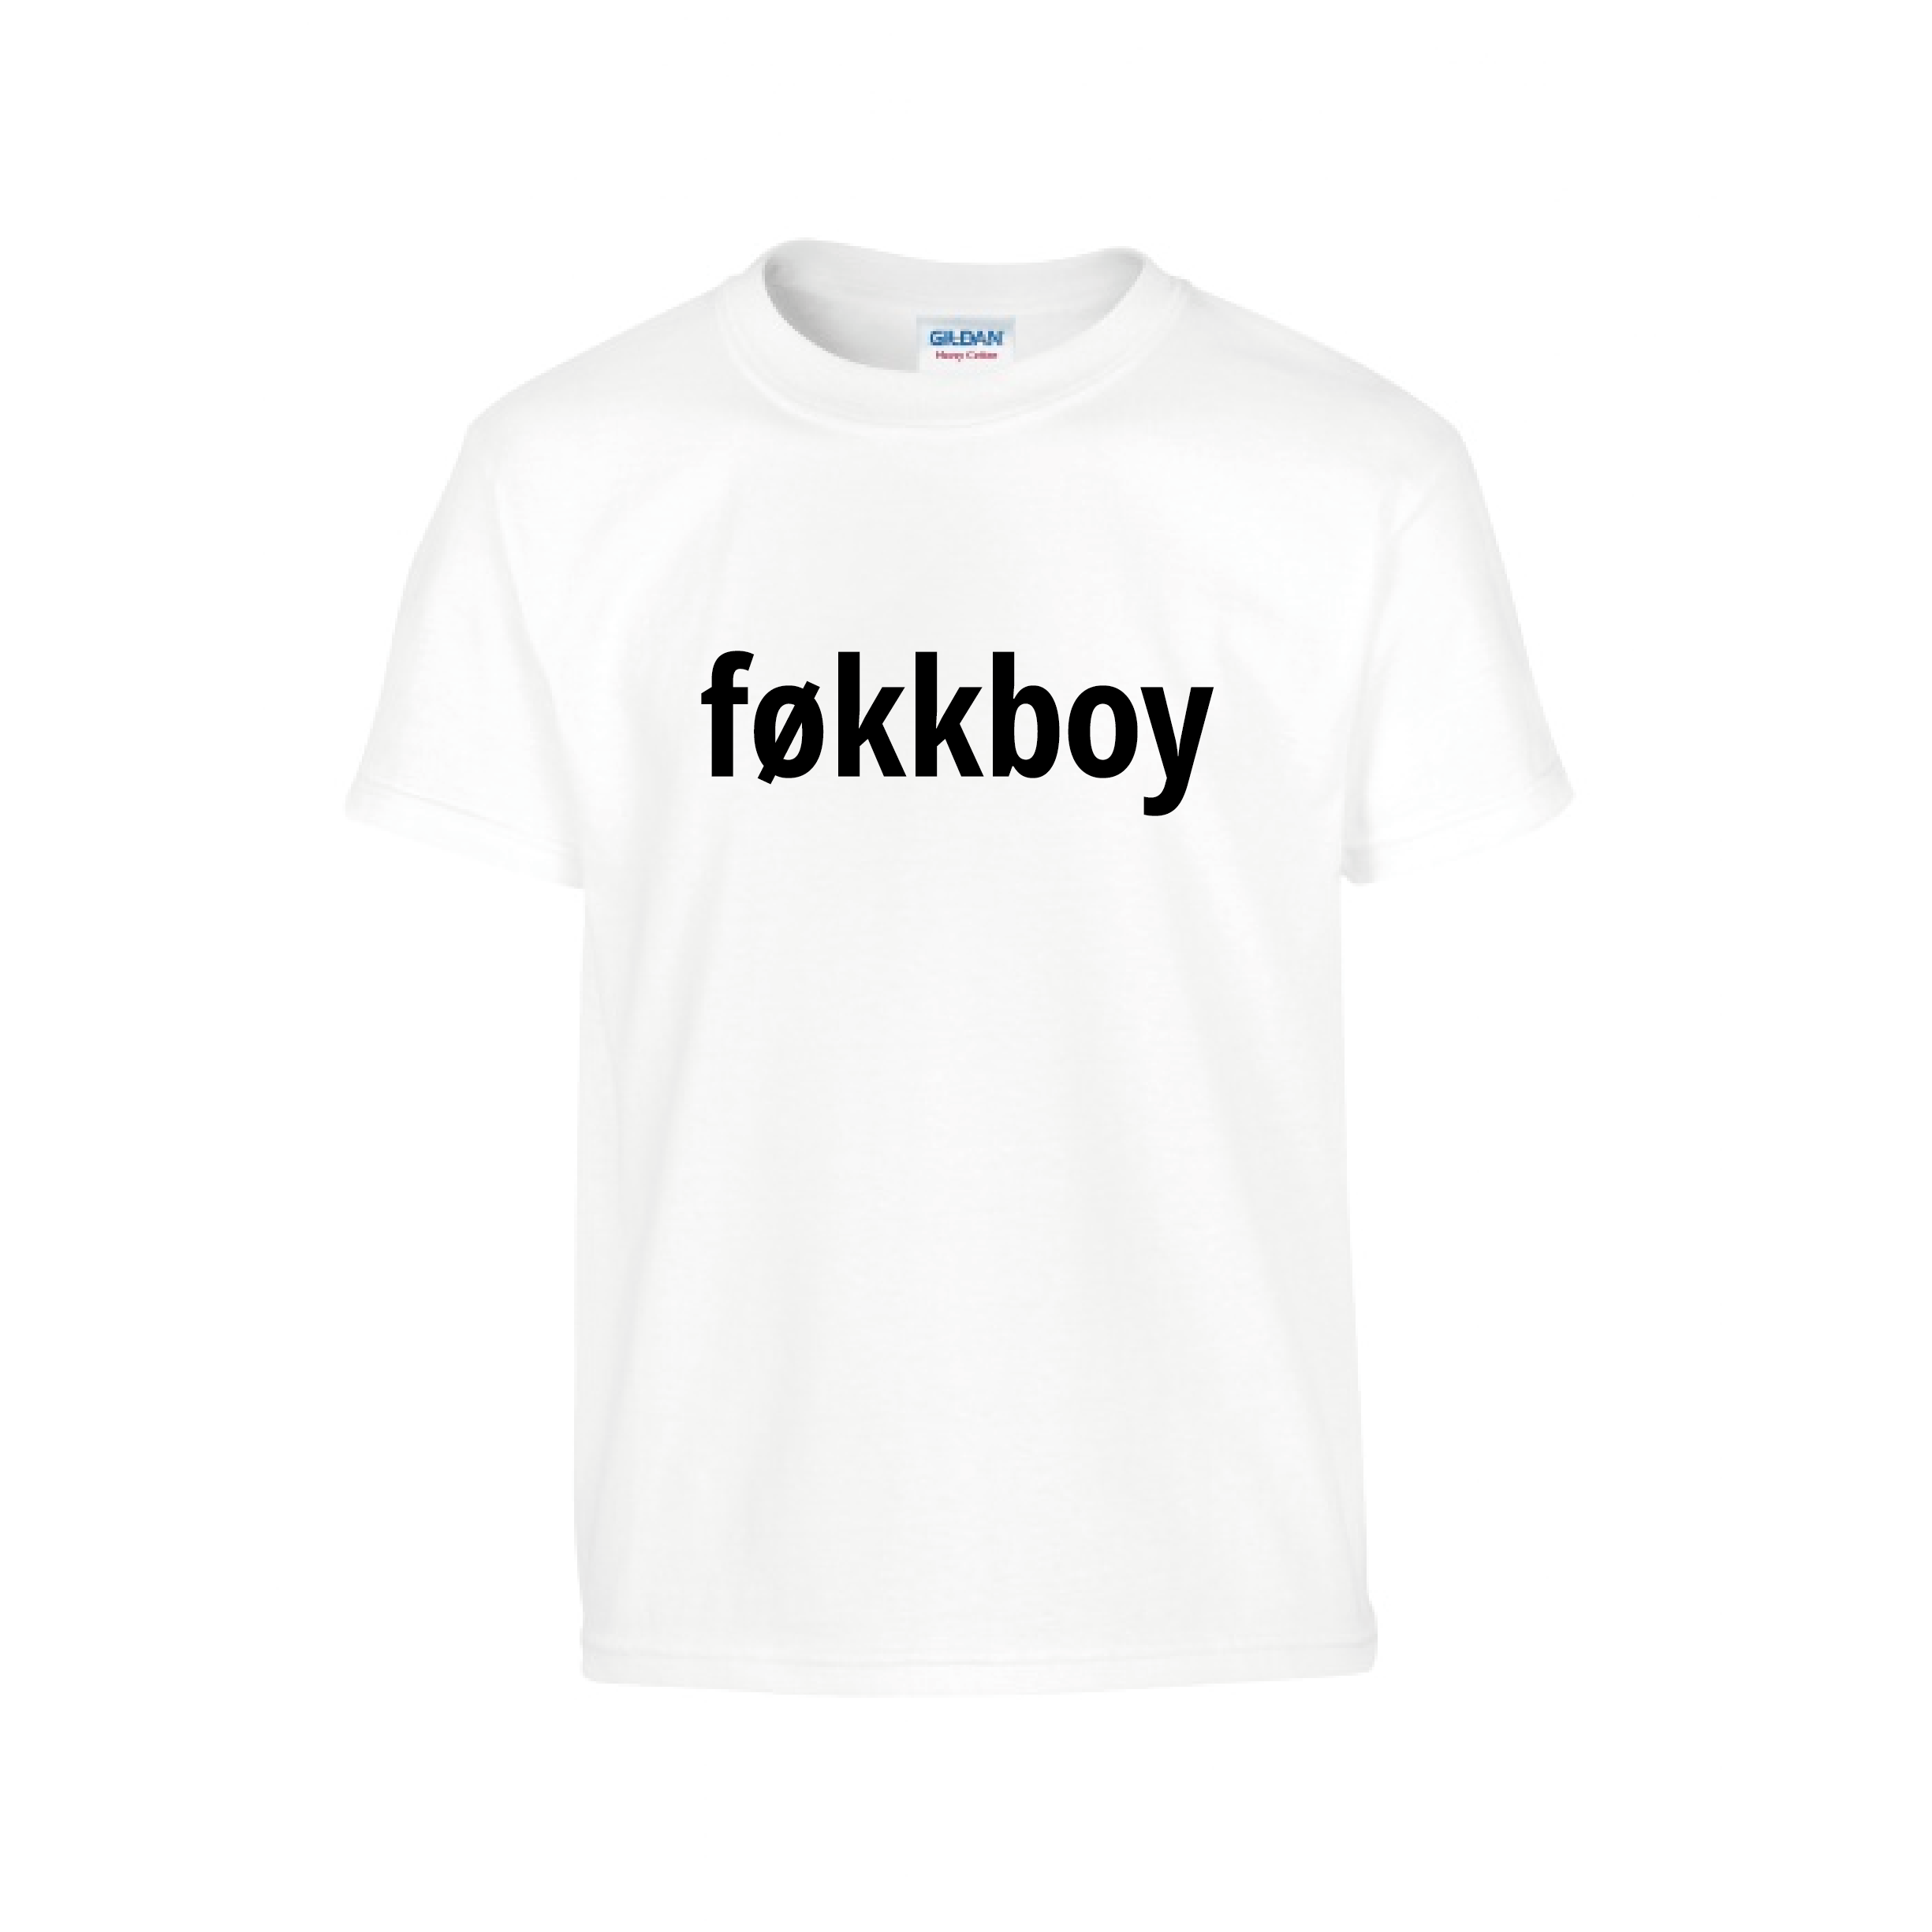 føkkboy t-shirt